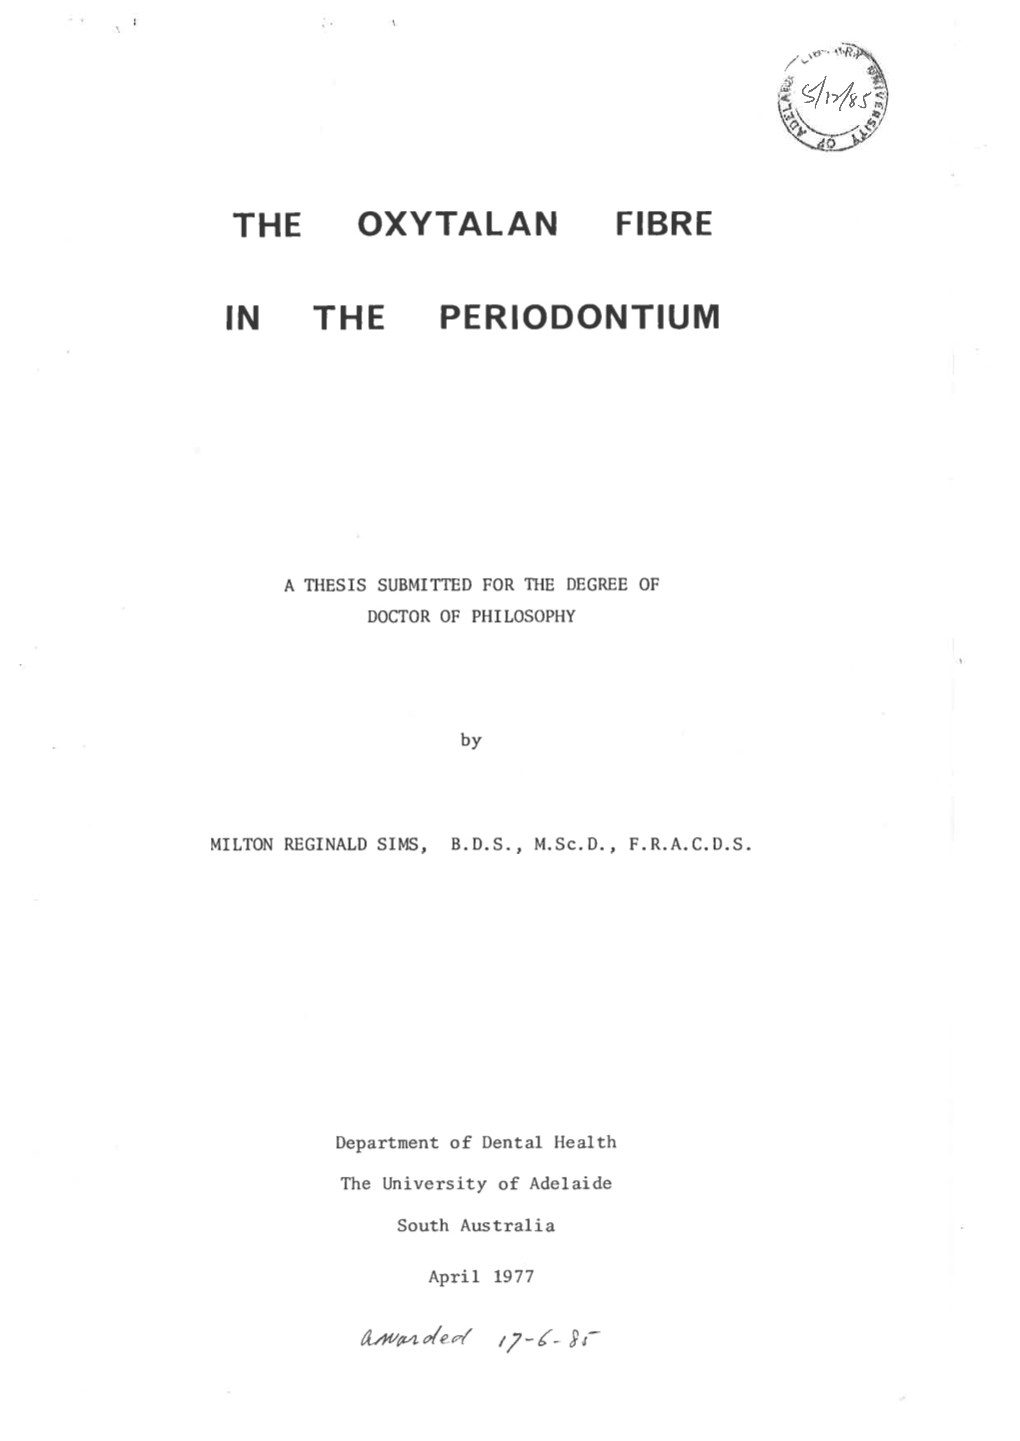 The Oxytalan Fibre in the Periodontium Was Unknown